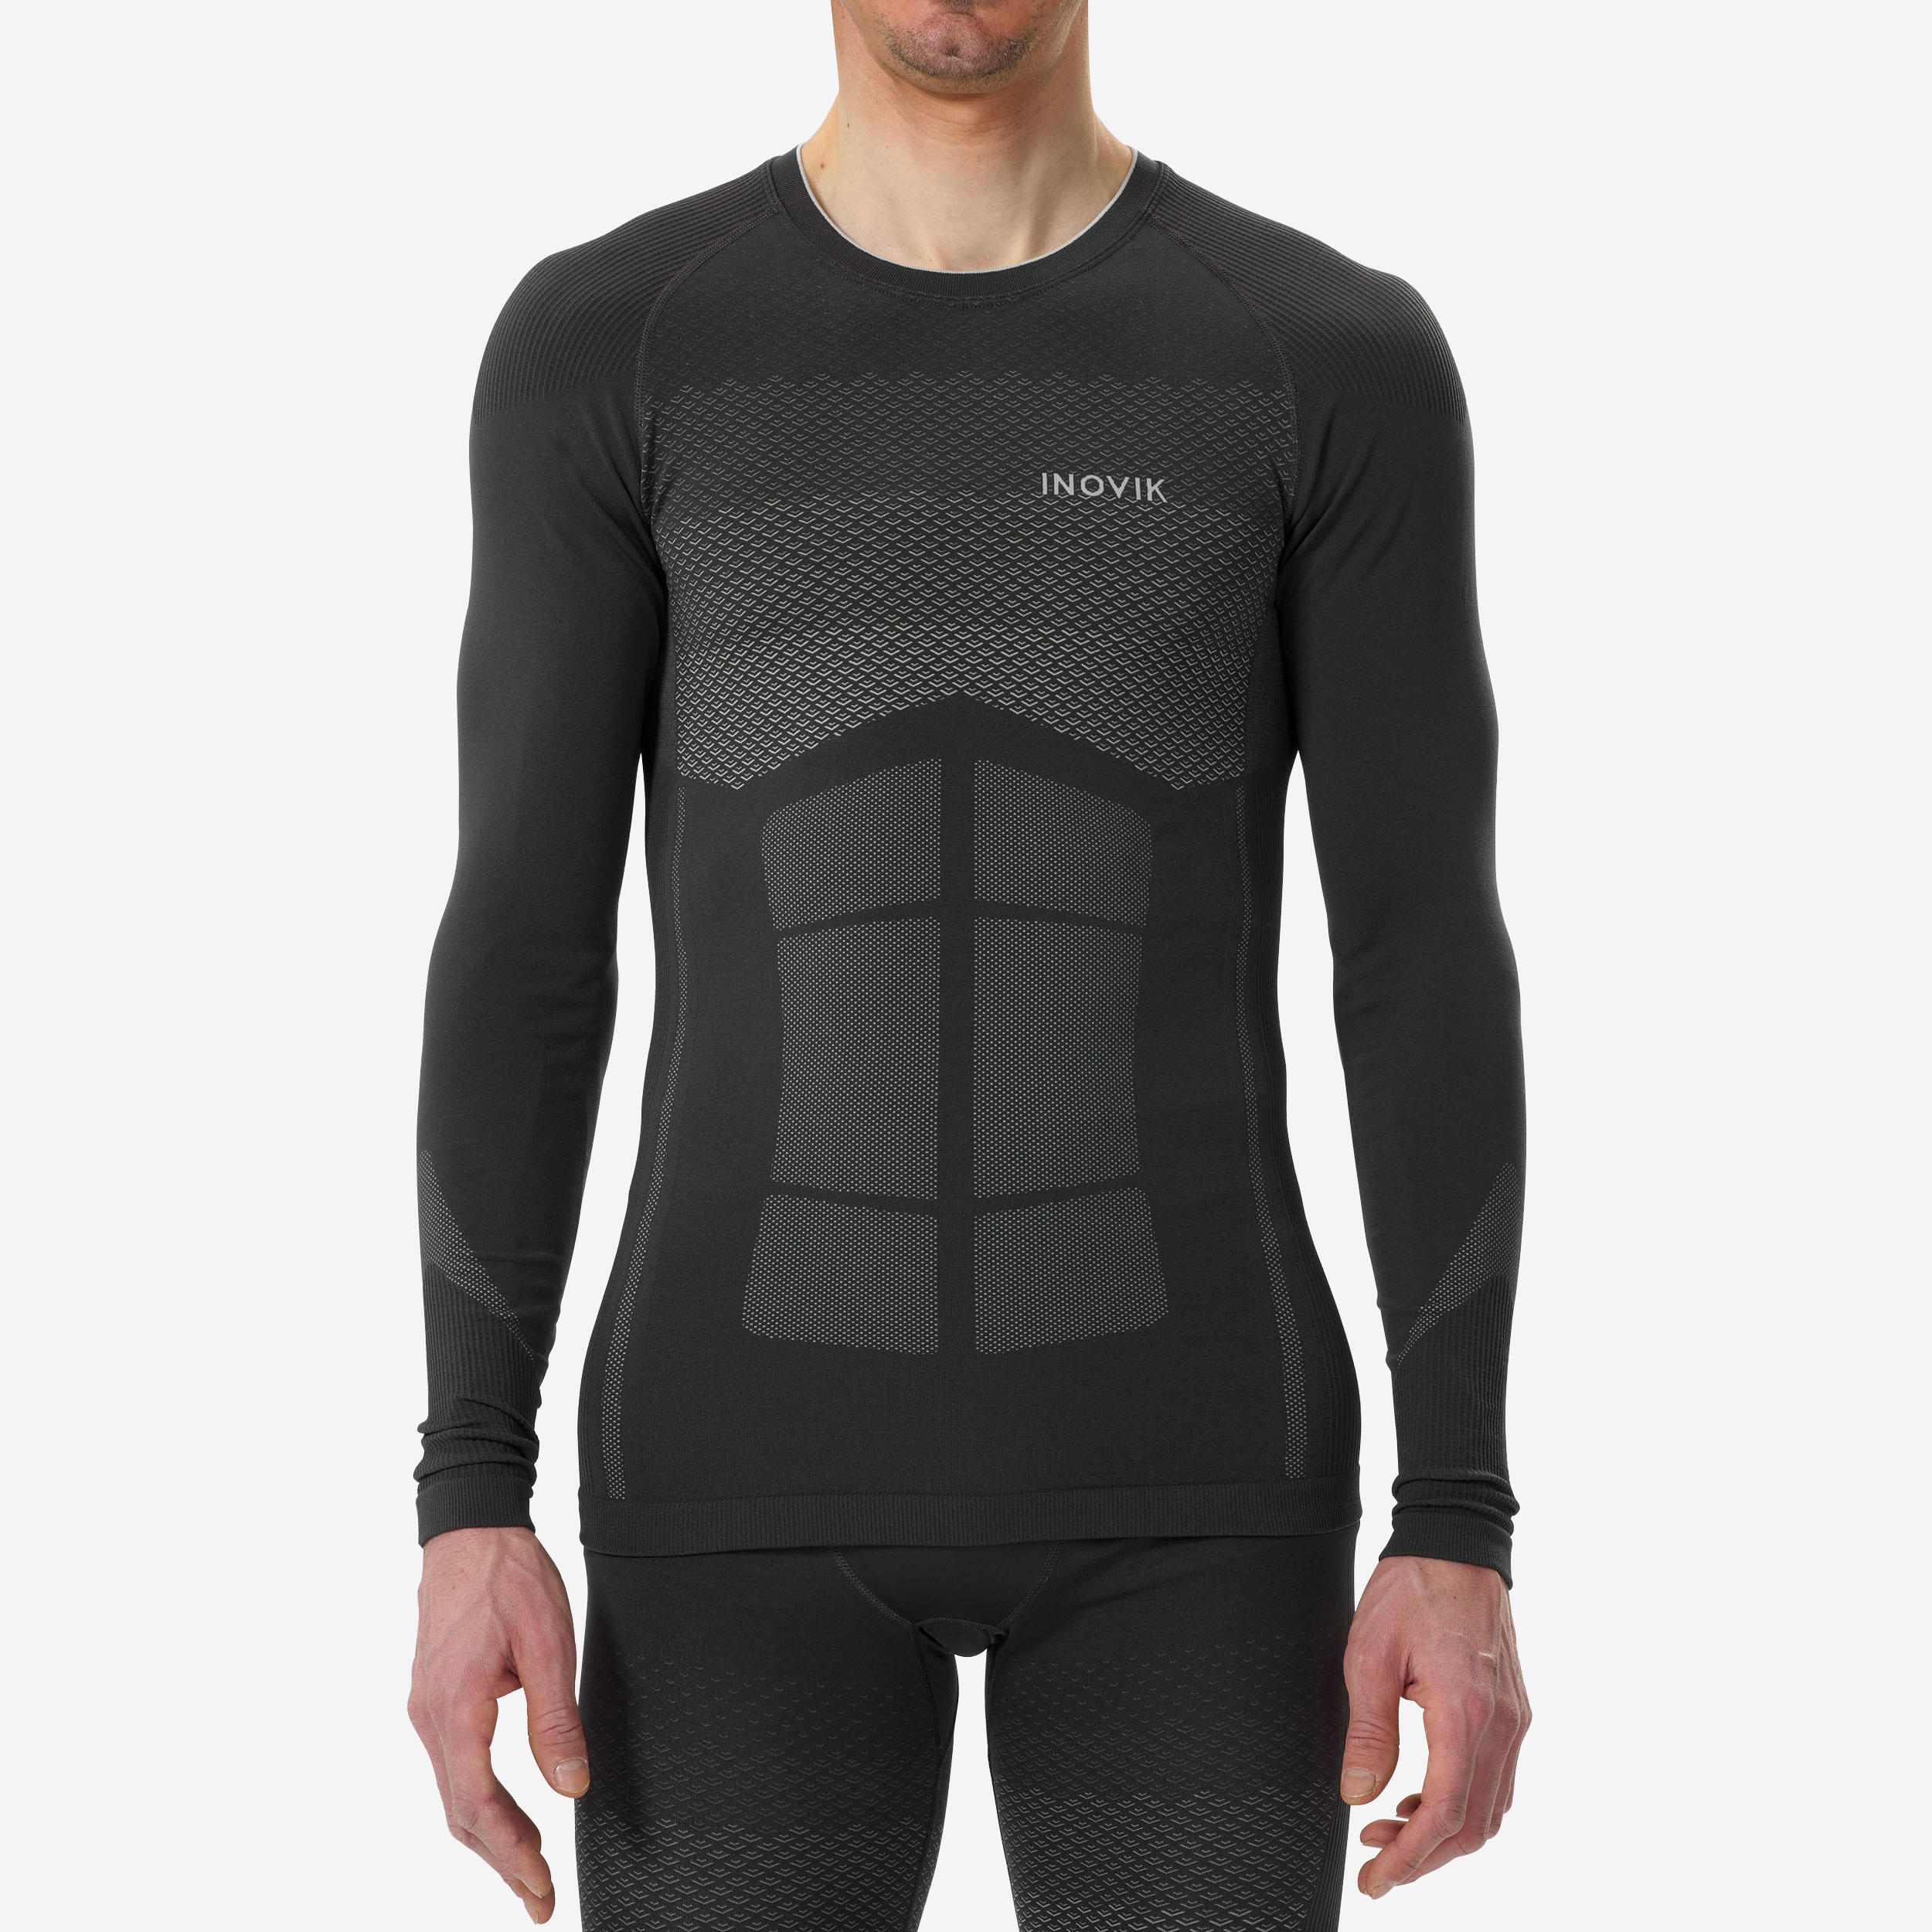 The North Face Ski Sport baselayer medium compression tights in black and  grey, Compare